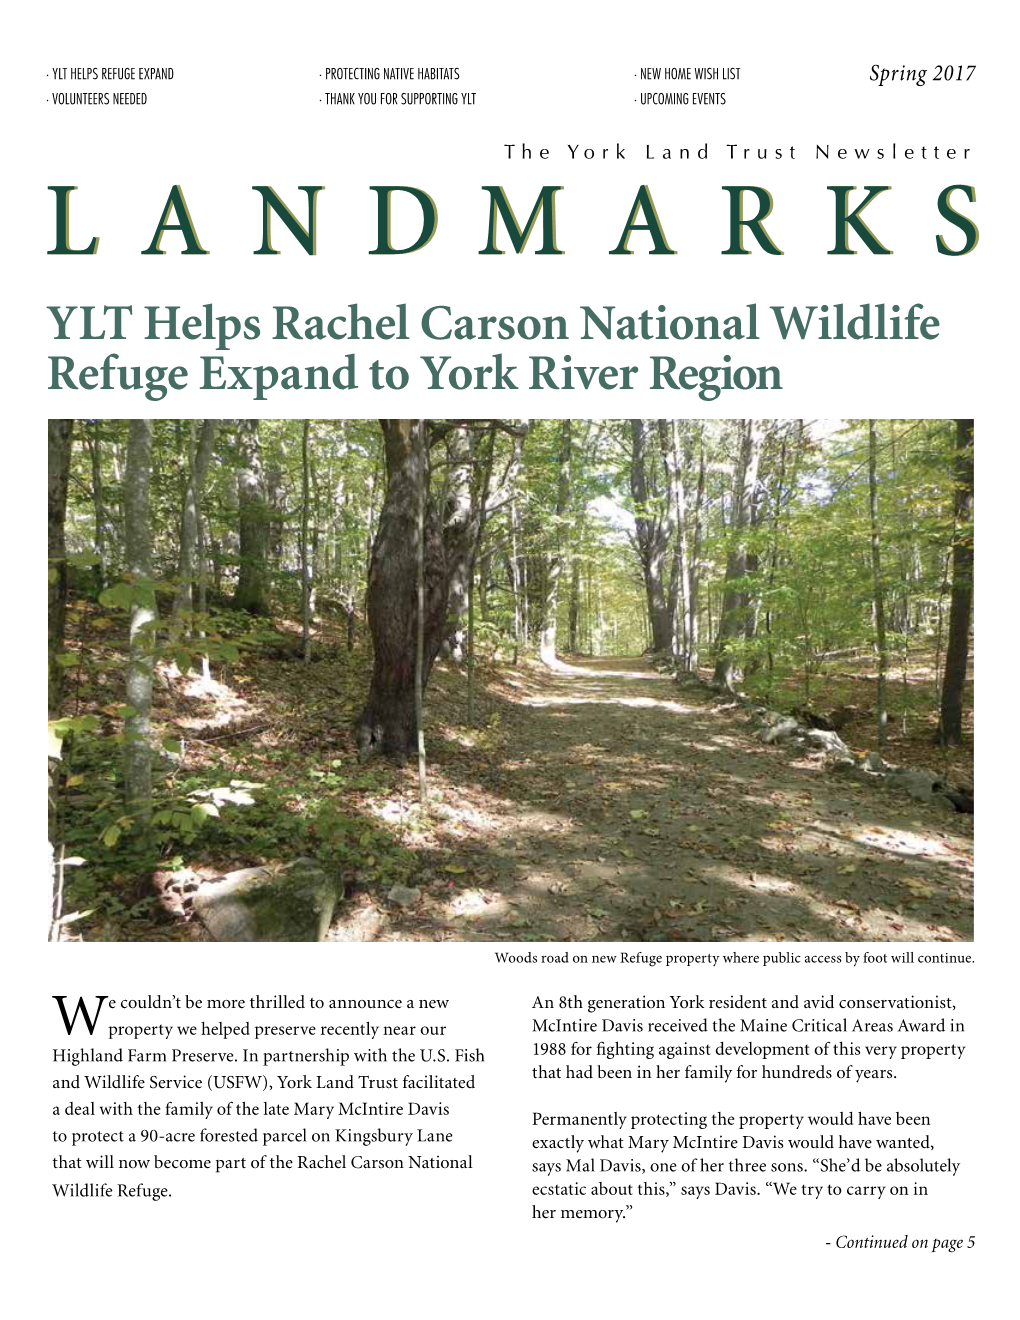 YLT Helps Rachel Carson National Wildlife Refuge Expand to York River Region